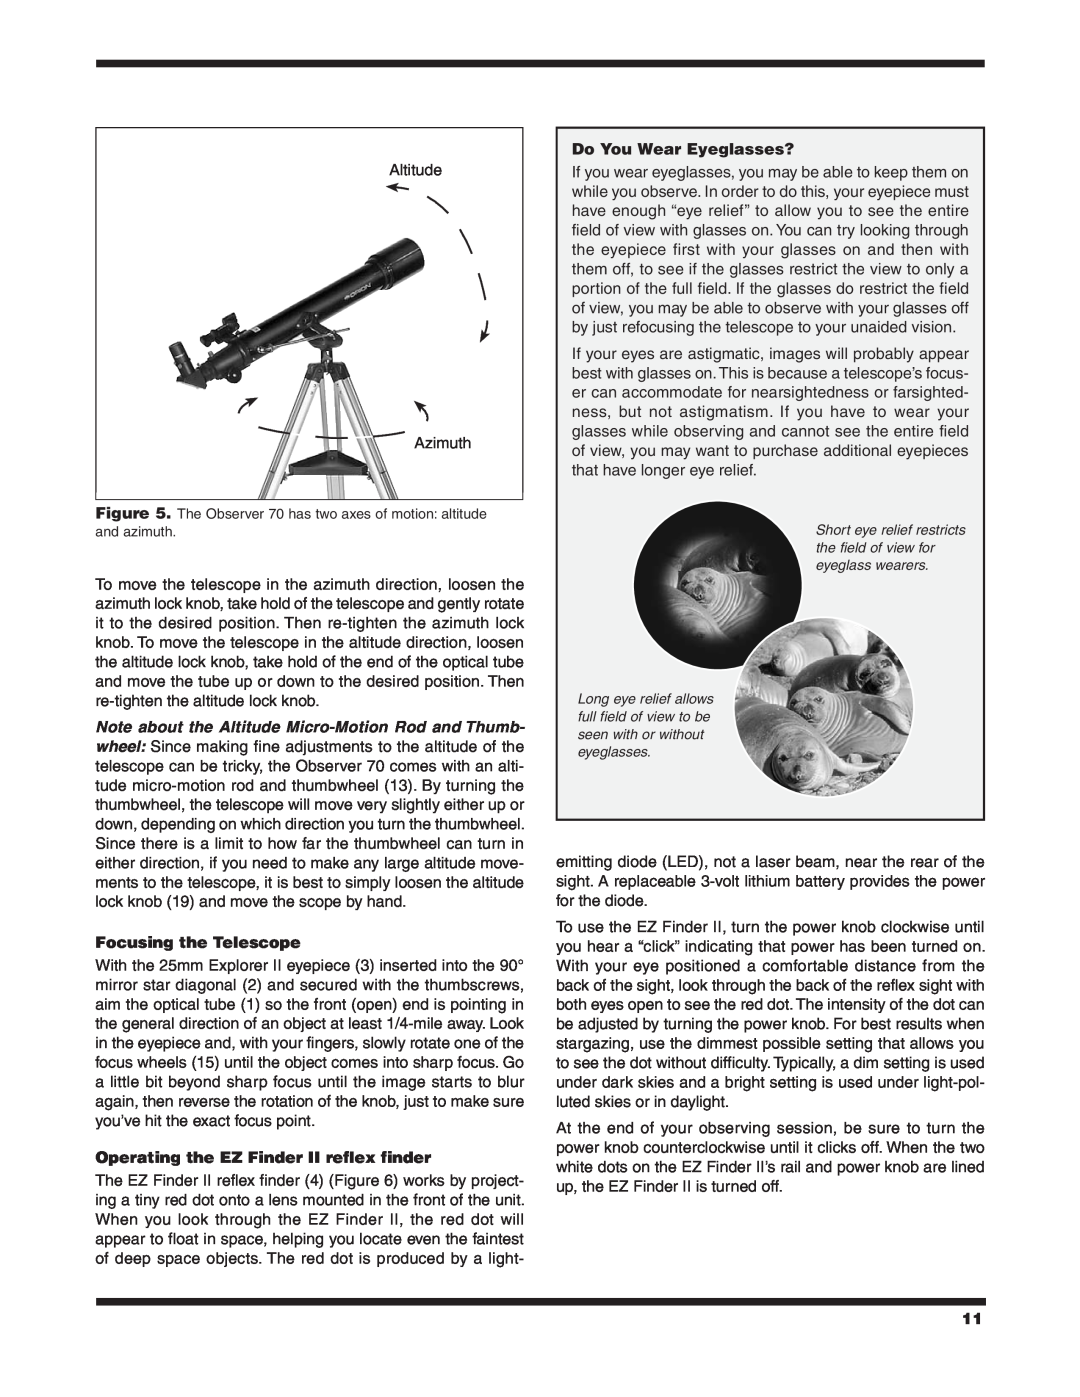 Orion 70MM AZ instruction manual Do You Wear Eyeglasses?, Focusing the Telescope, Operating the EZ Finder II reflex finder 